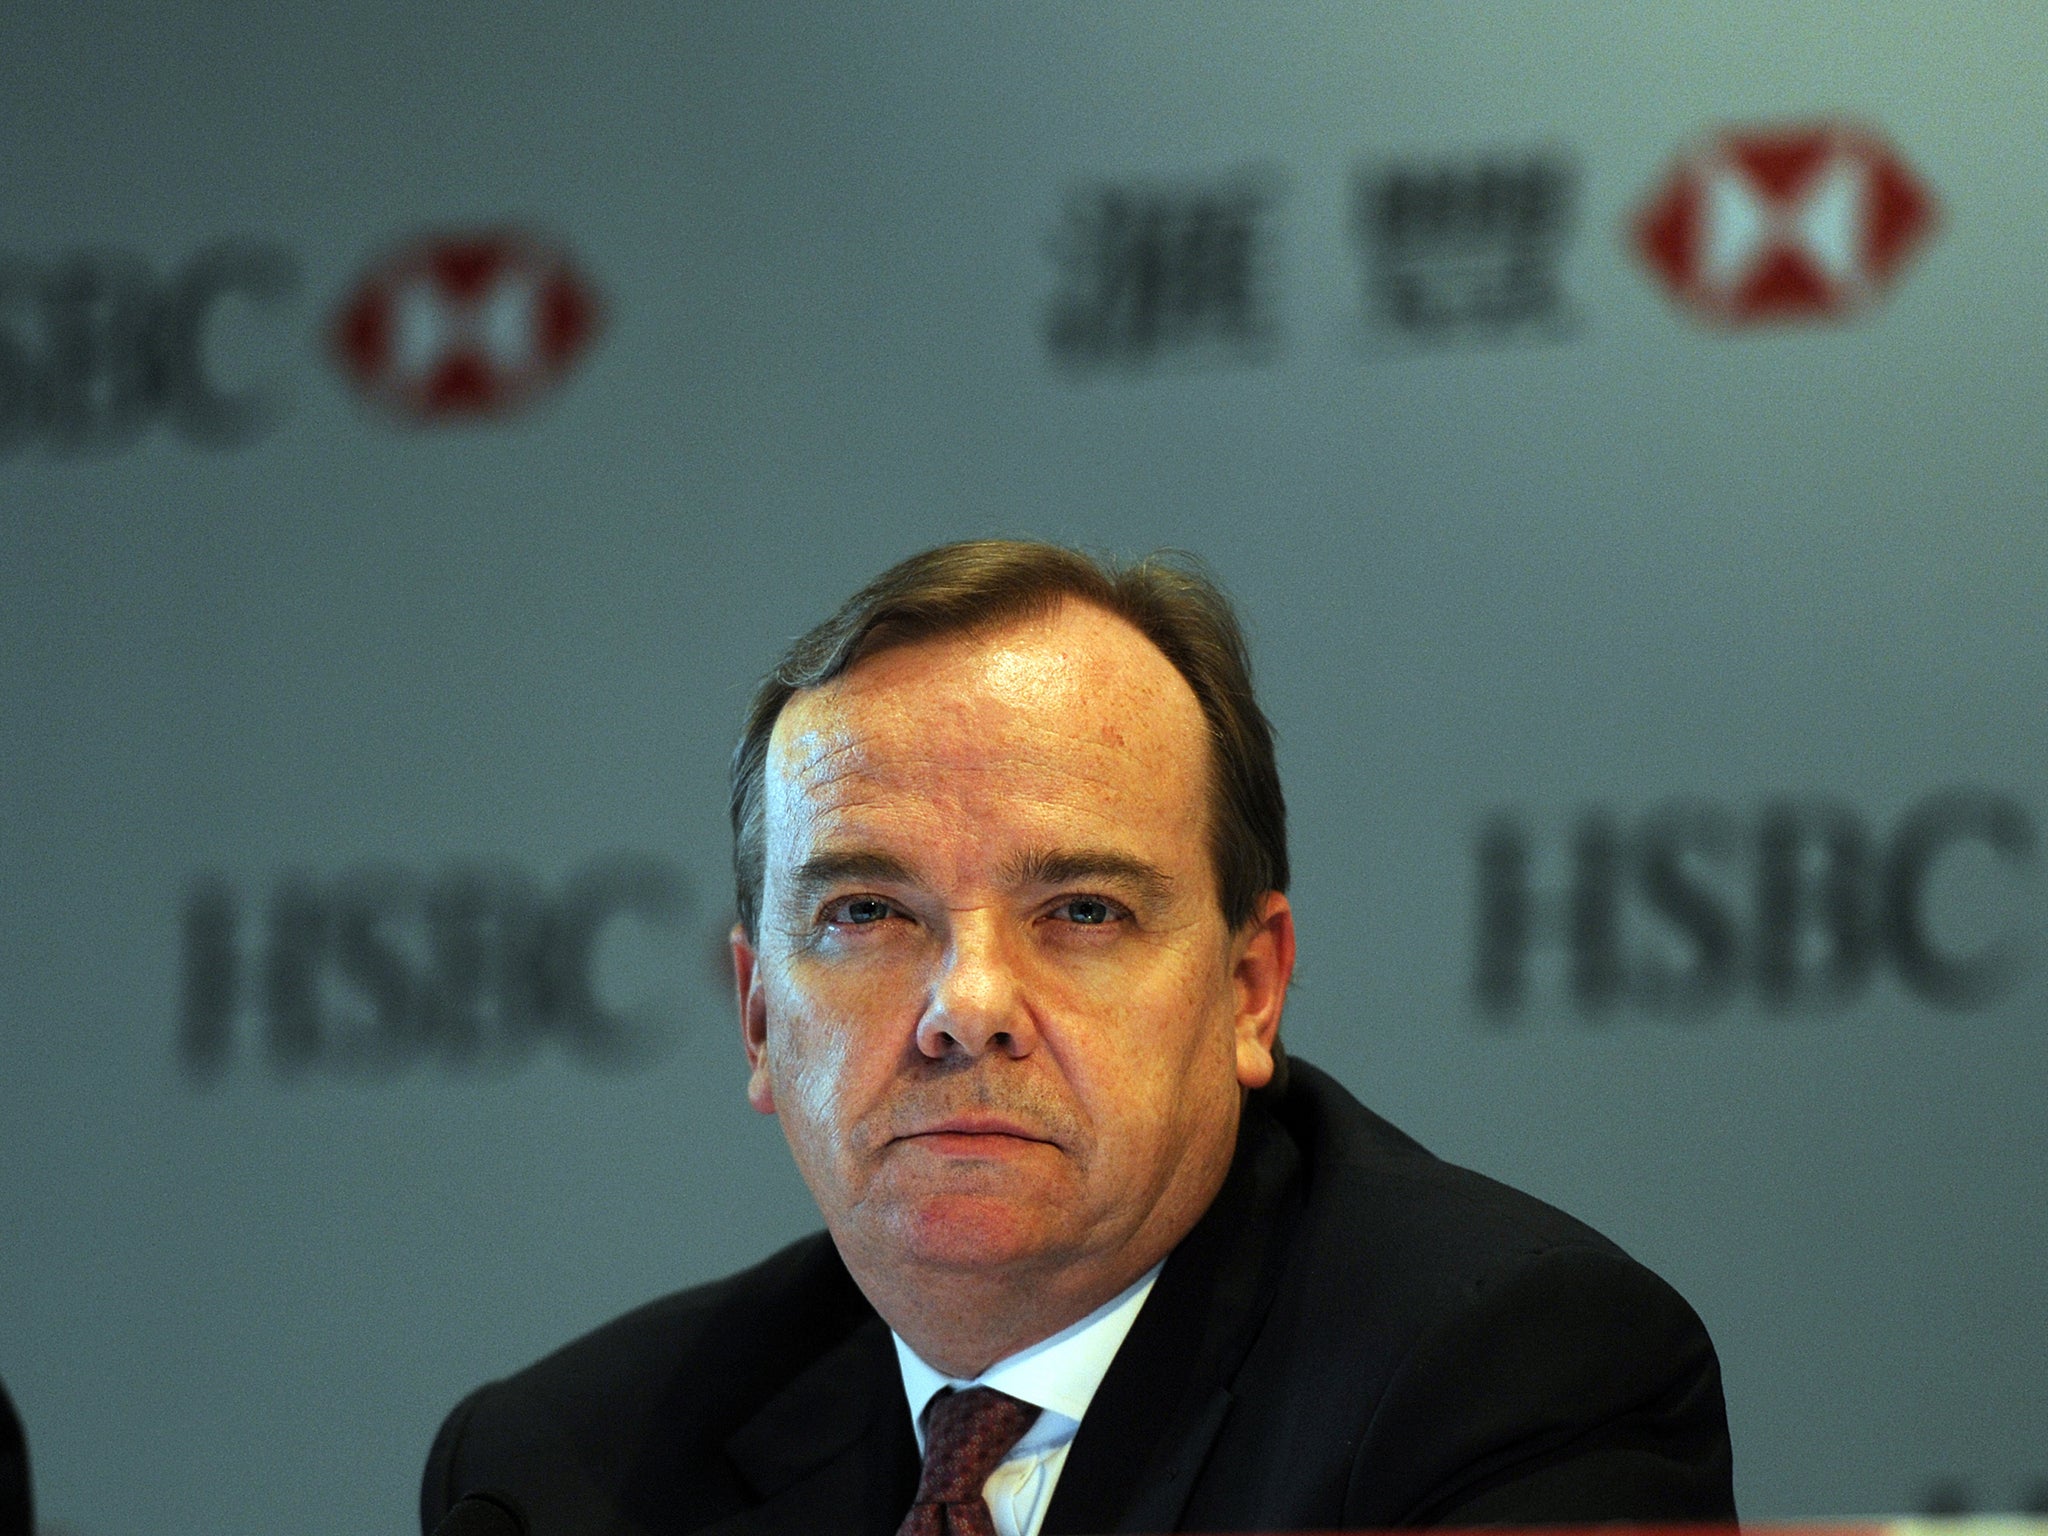 Stuart Gulliver, HSBC's chief executive